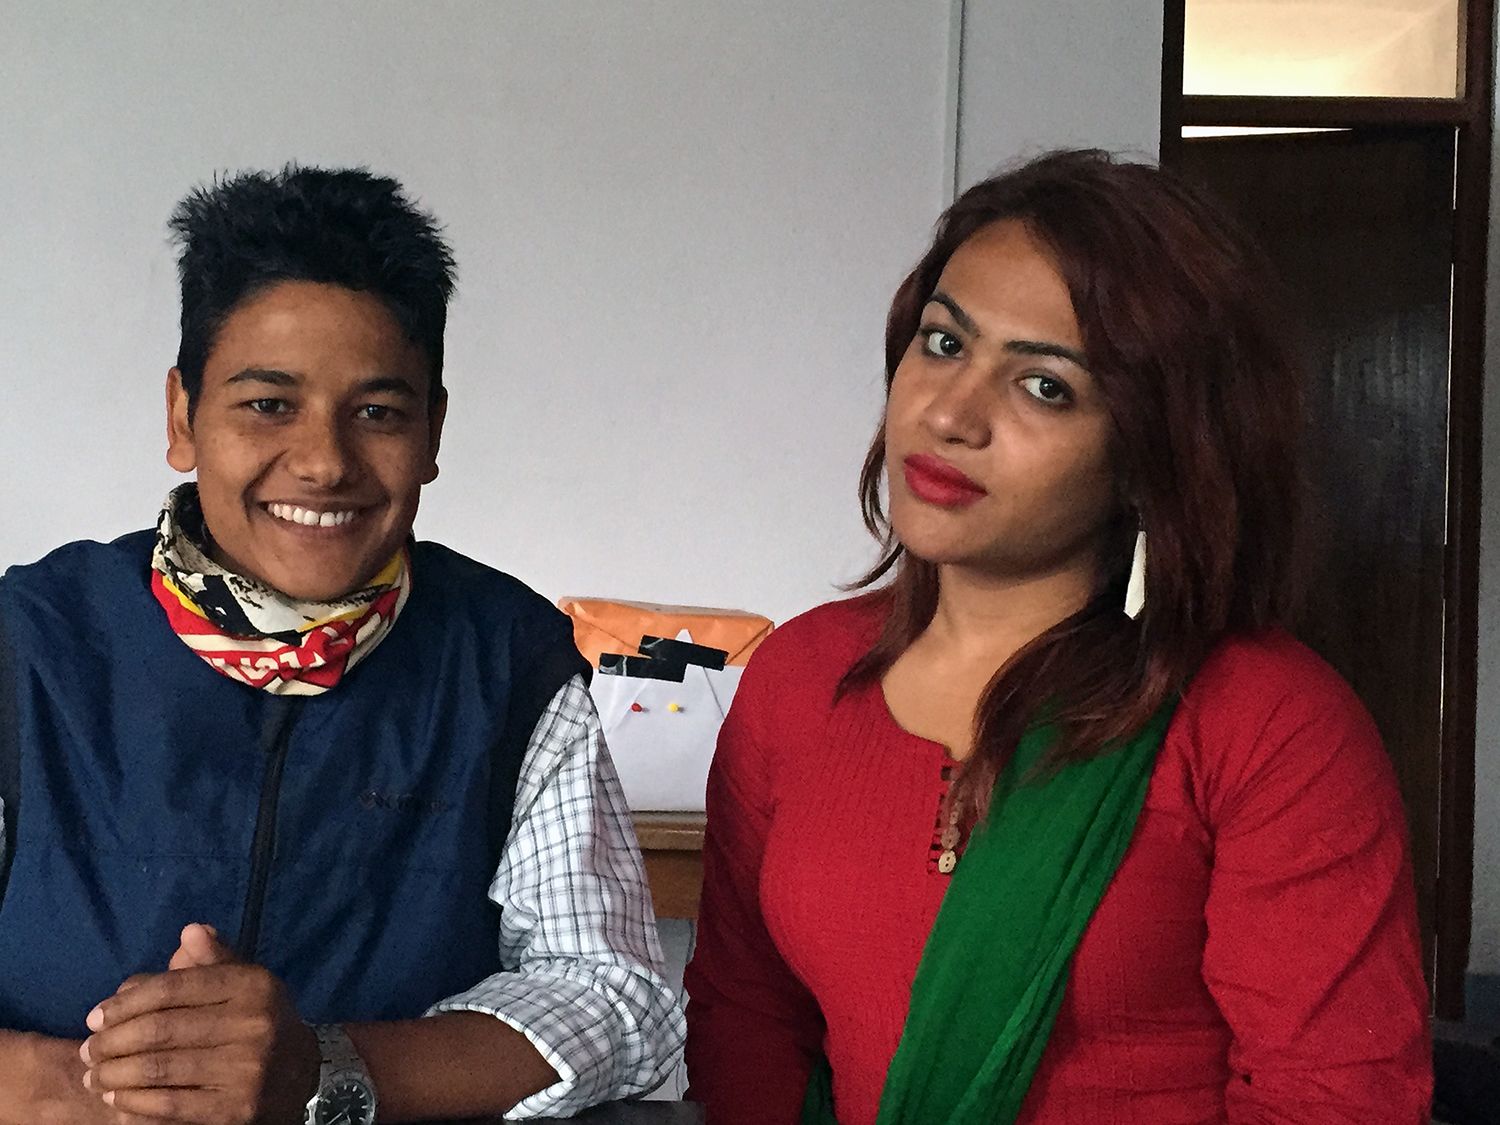 Nepqli Lesbian Sex - Nepal offers 'third gender' option | CNN